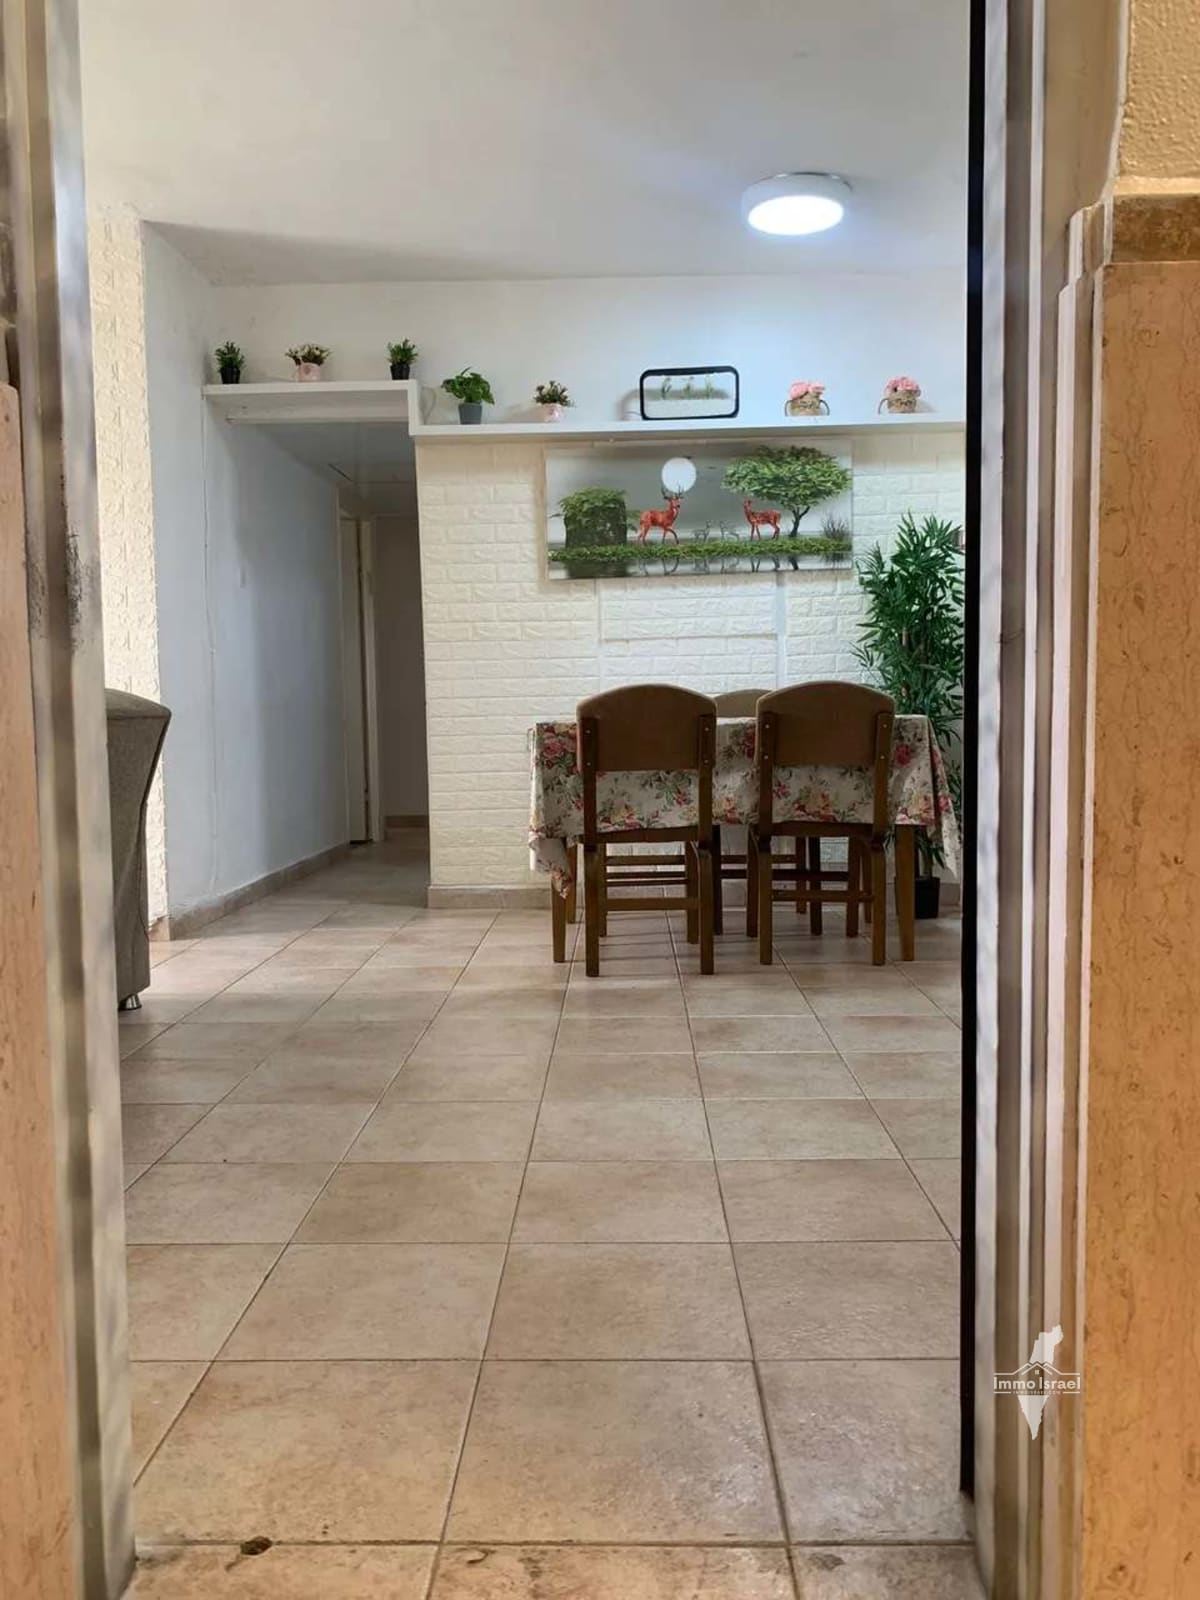 For Sale: 4-Room Apartment in Gila, Jerusalem